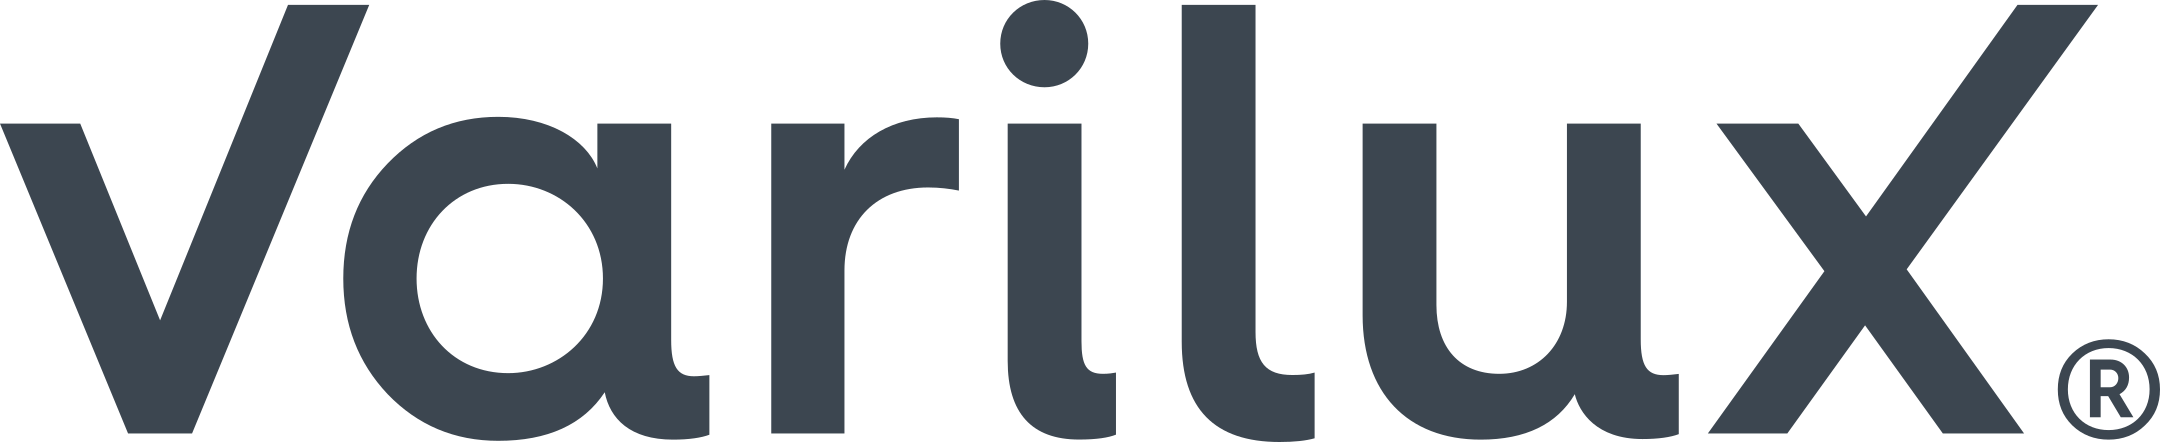 varilux logo 1 - Varilux Logo